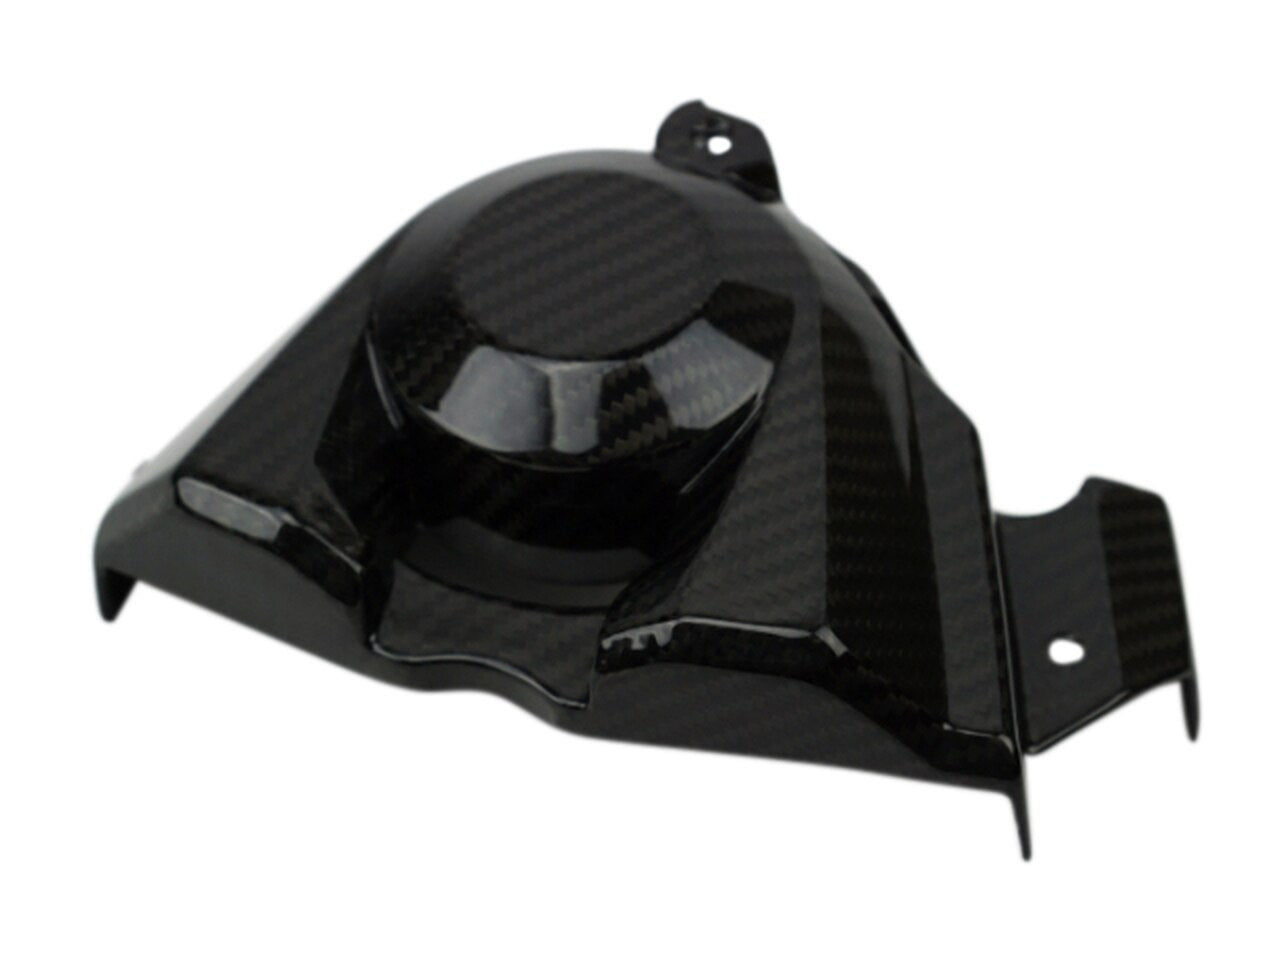 Motocomposites Sprocket Cover in Carbon with Fiberglass for Kawasaki Ninja H2